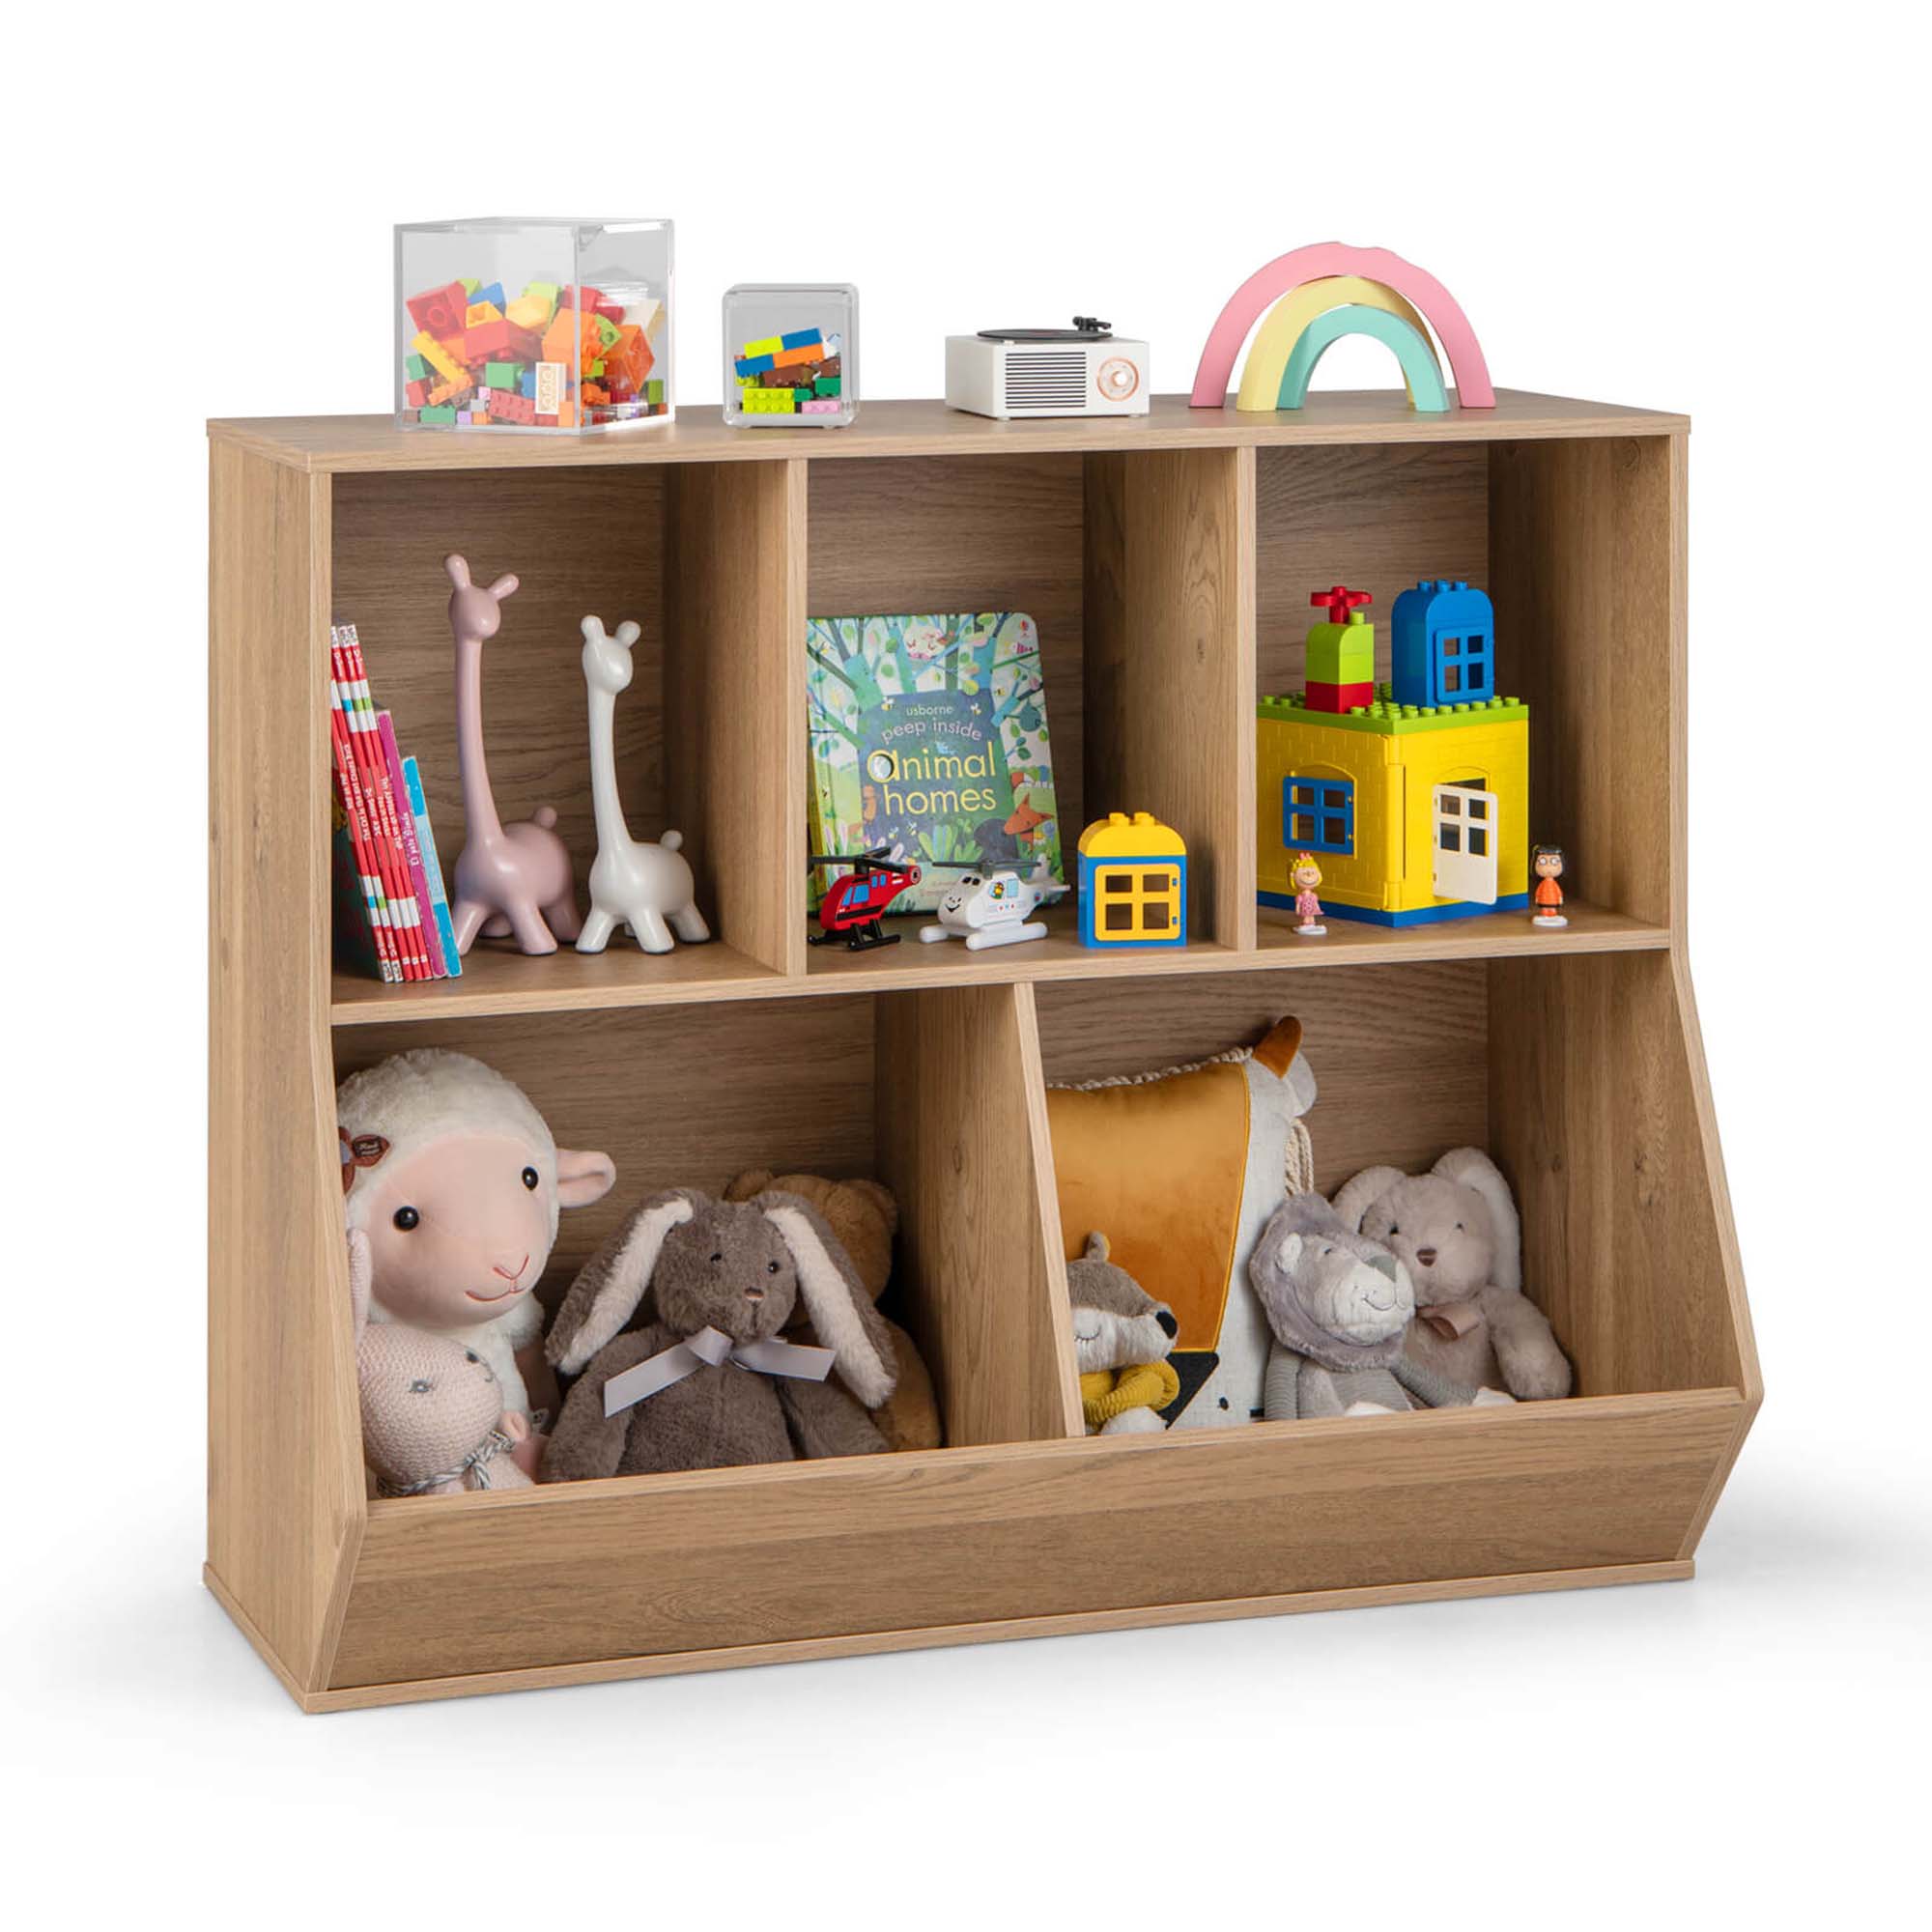 Costway 5-Cubby Kids Toy Storage Organizer Wooden Bookshelf Display Cabinet Natural - image 1 of 10